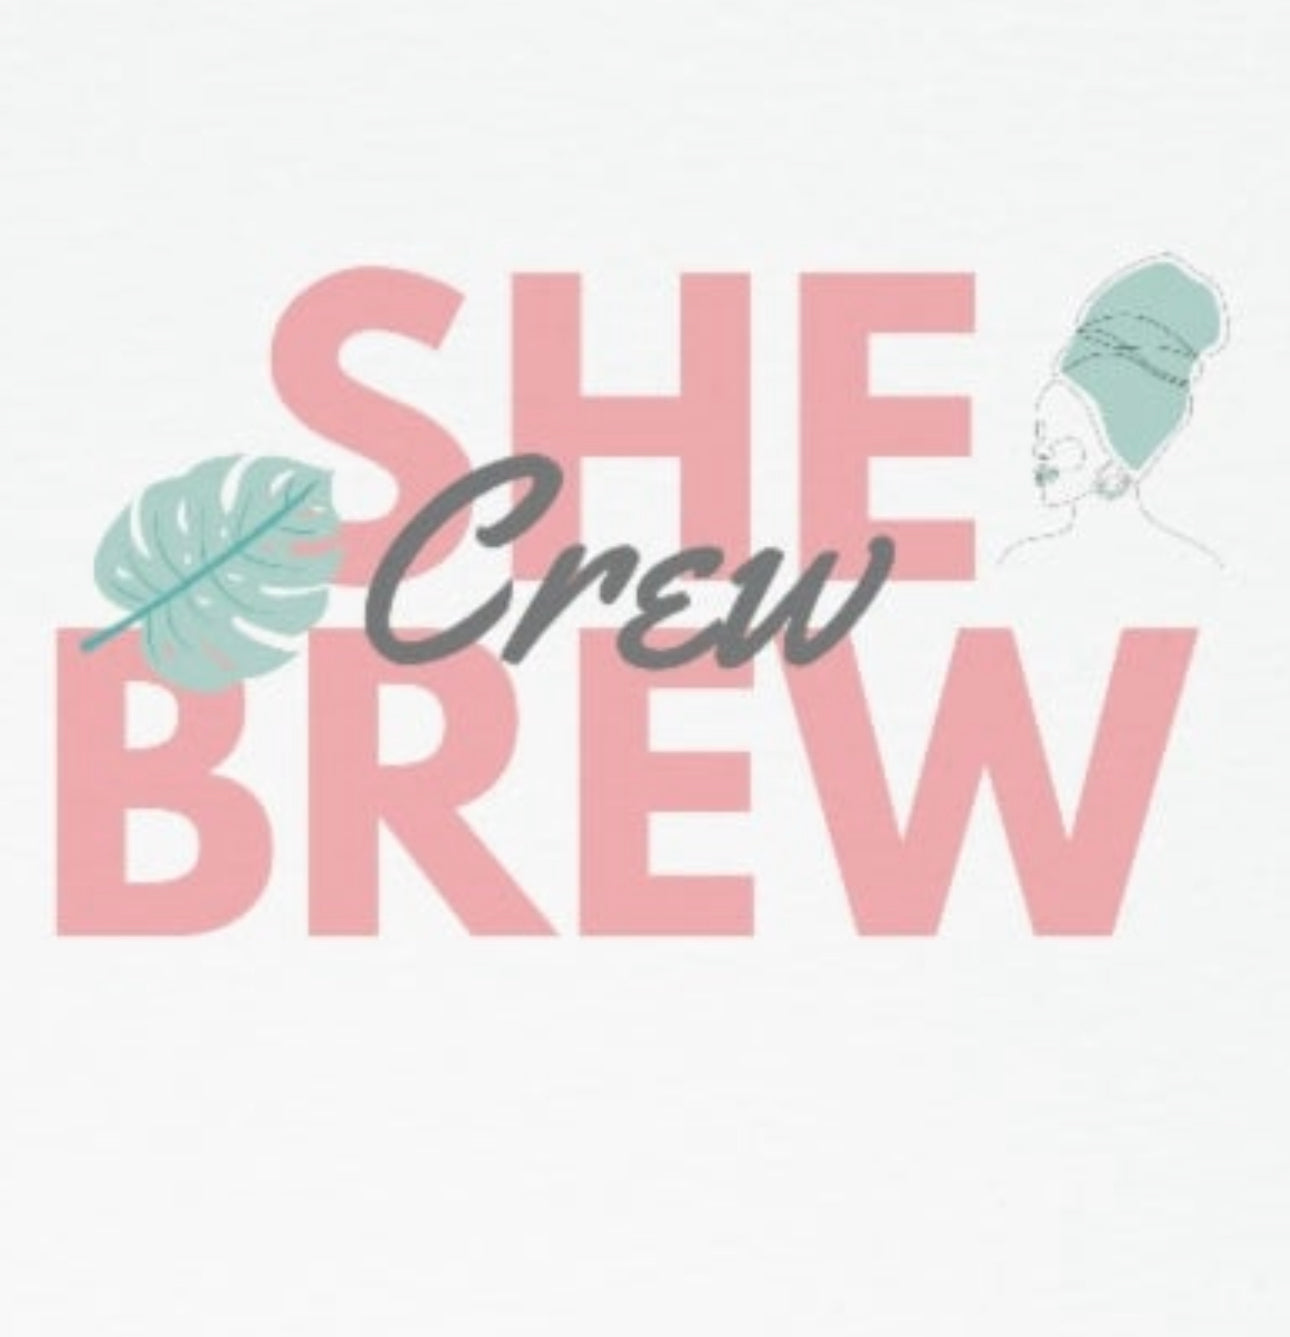 Shebrew Crew Dress